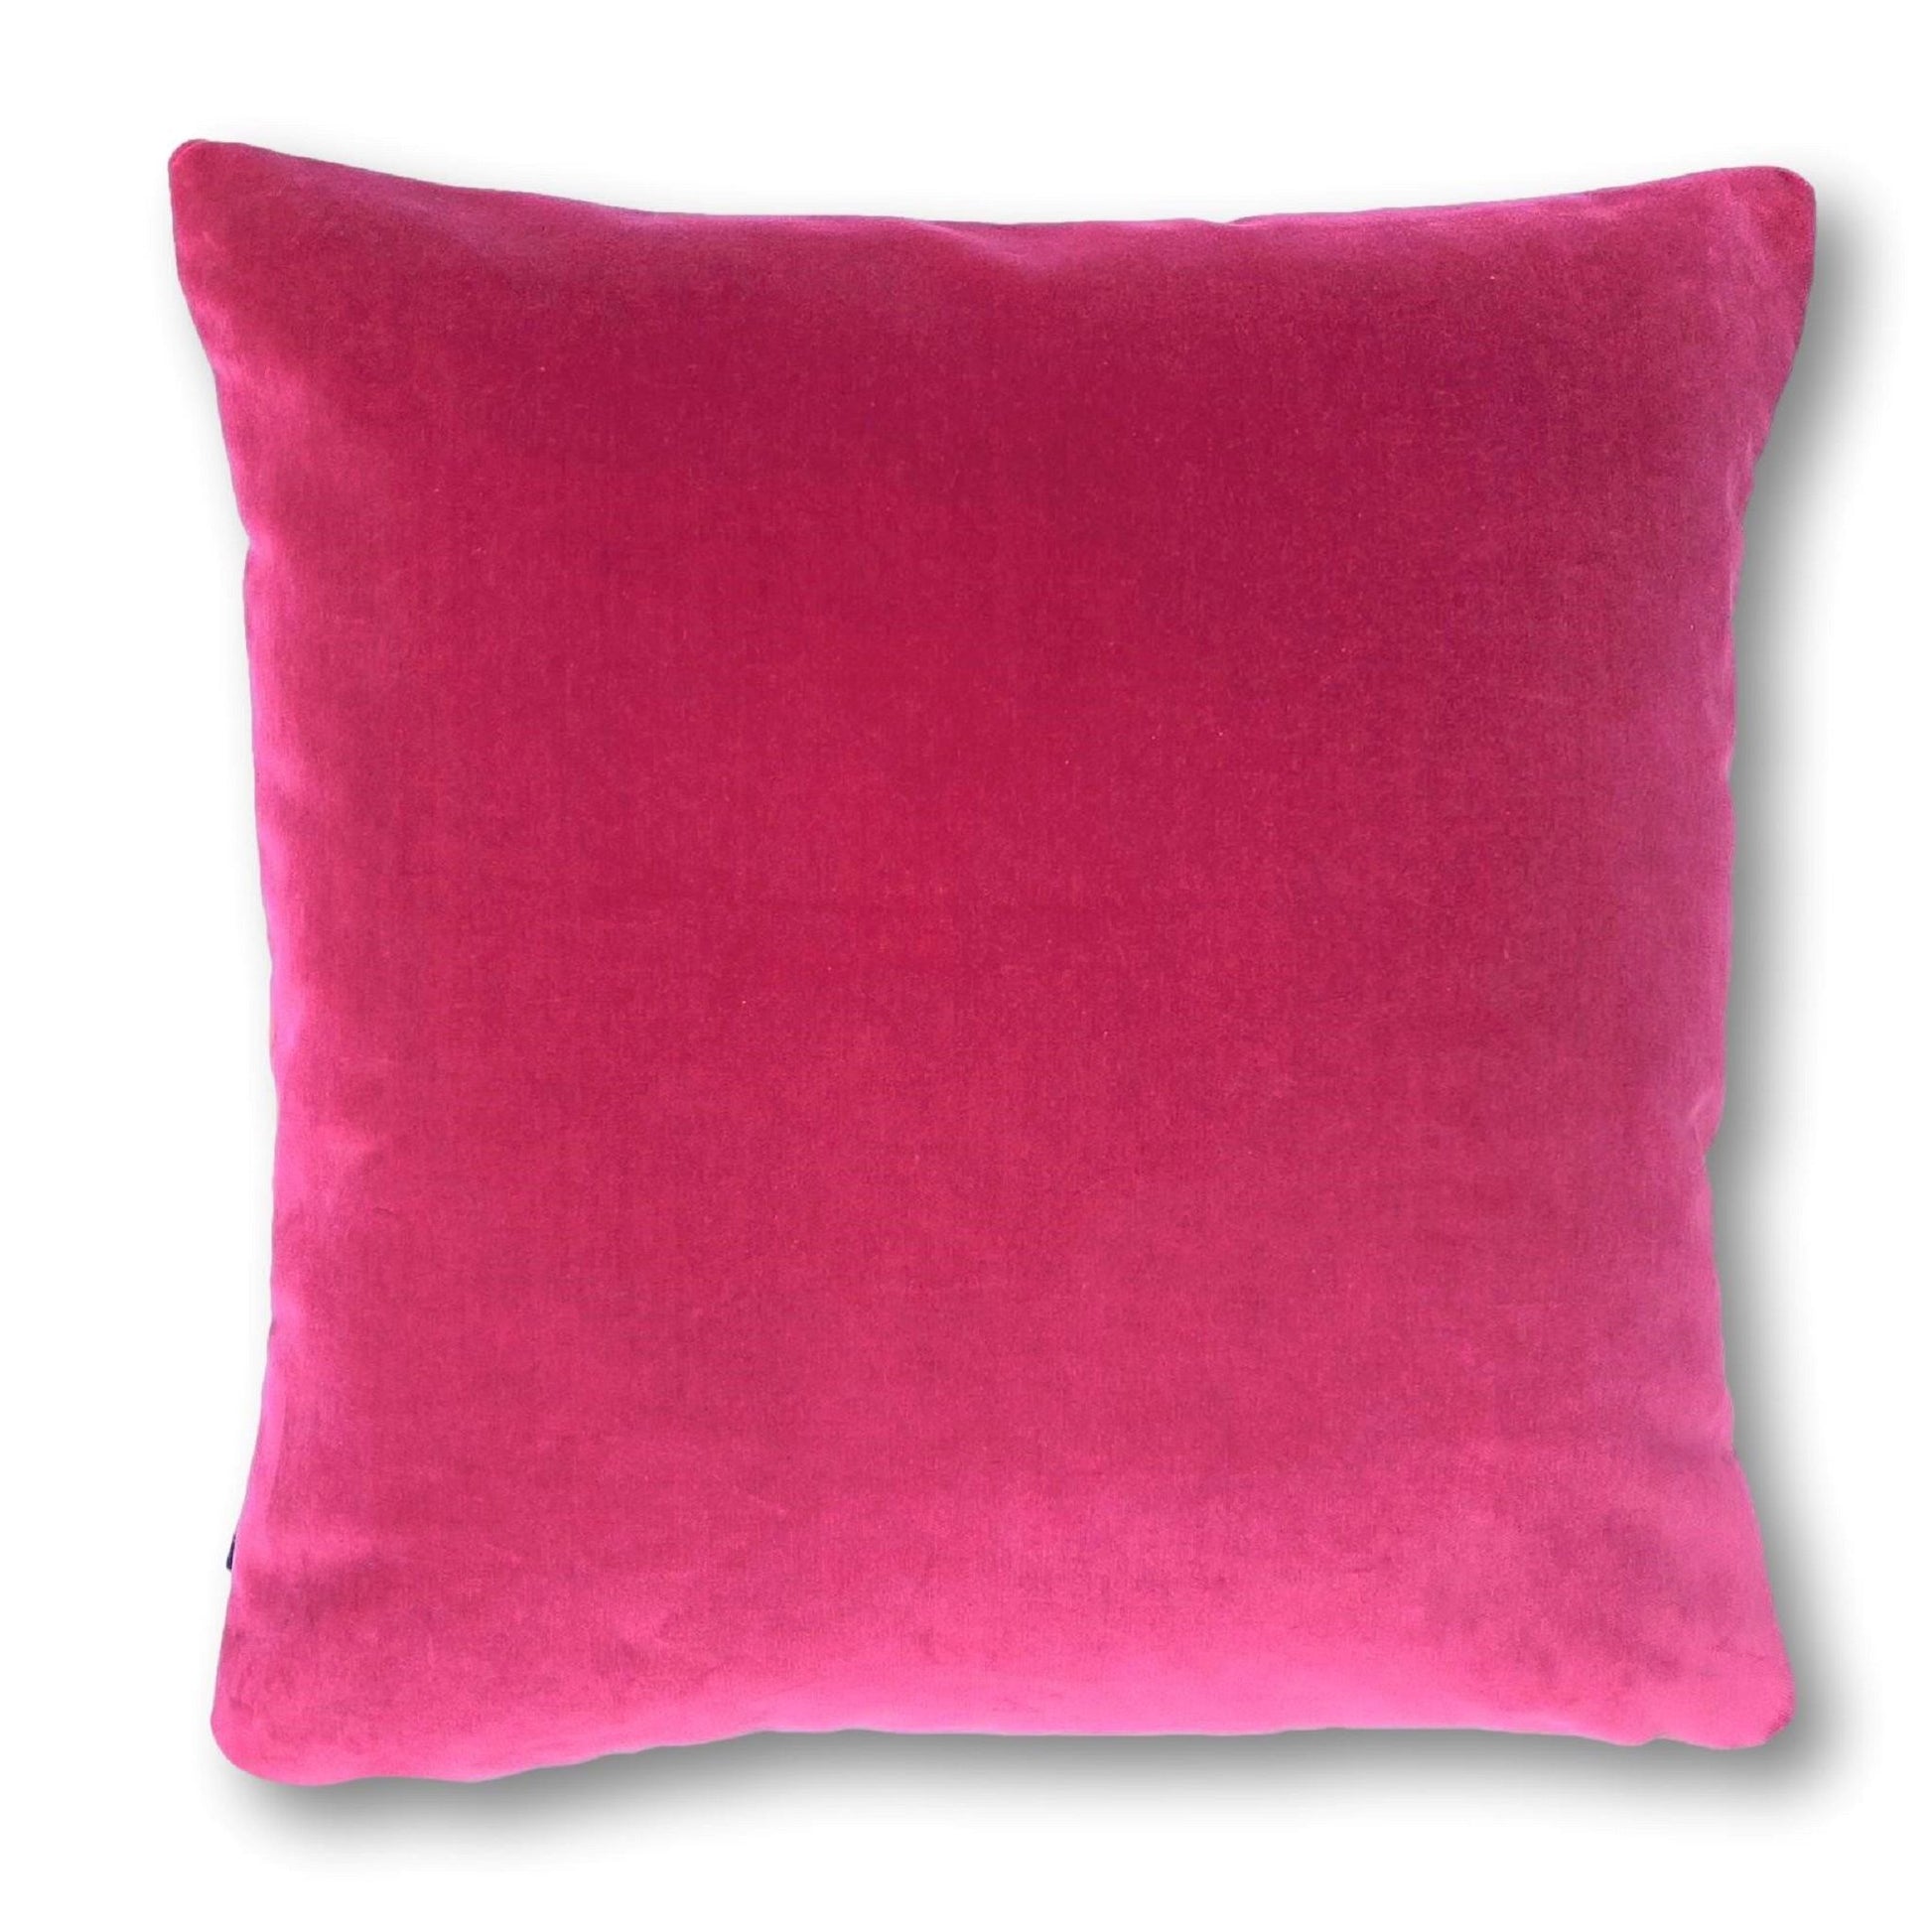 sage and pink cushions